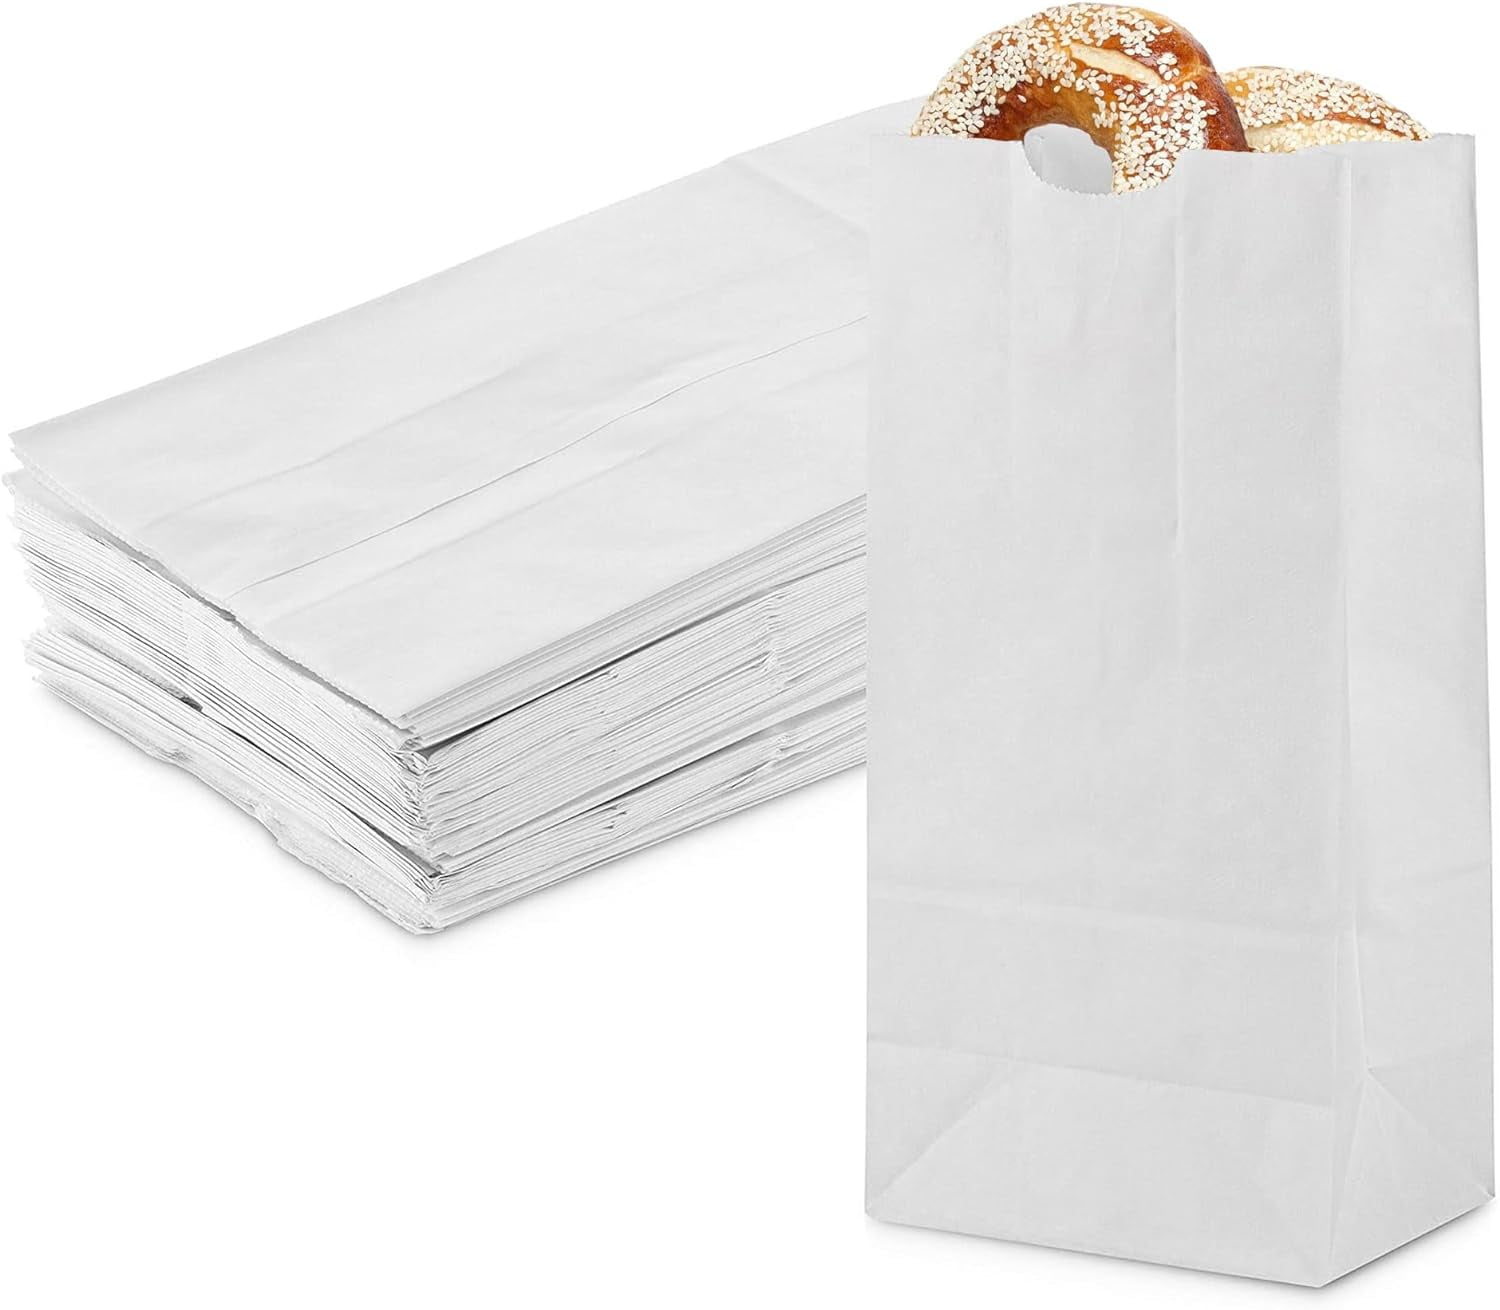 General #2 Paper Grocery Bag 30lb Kraft Standard 4 5/16 x 2 7/16 x 7 7/8  500 bags GK2500, 1 - Harris Teeter